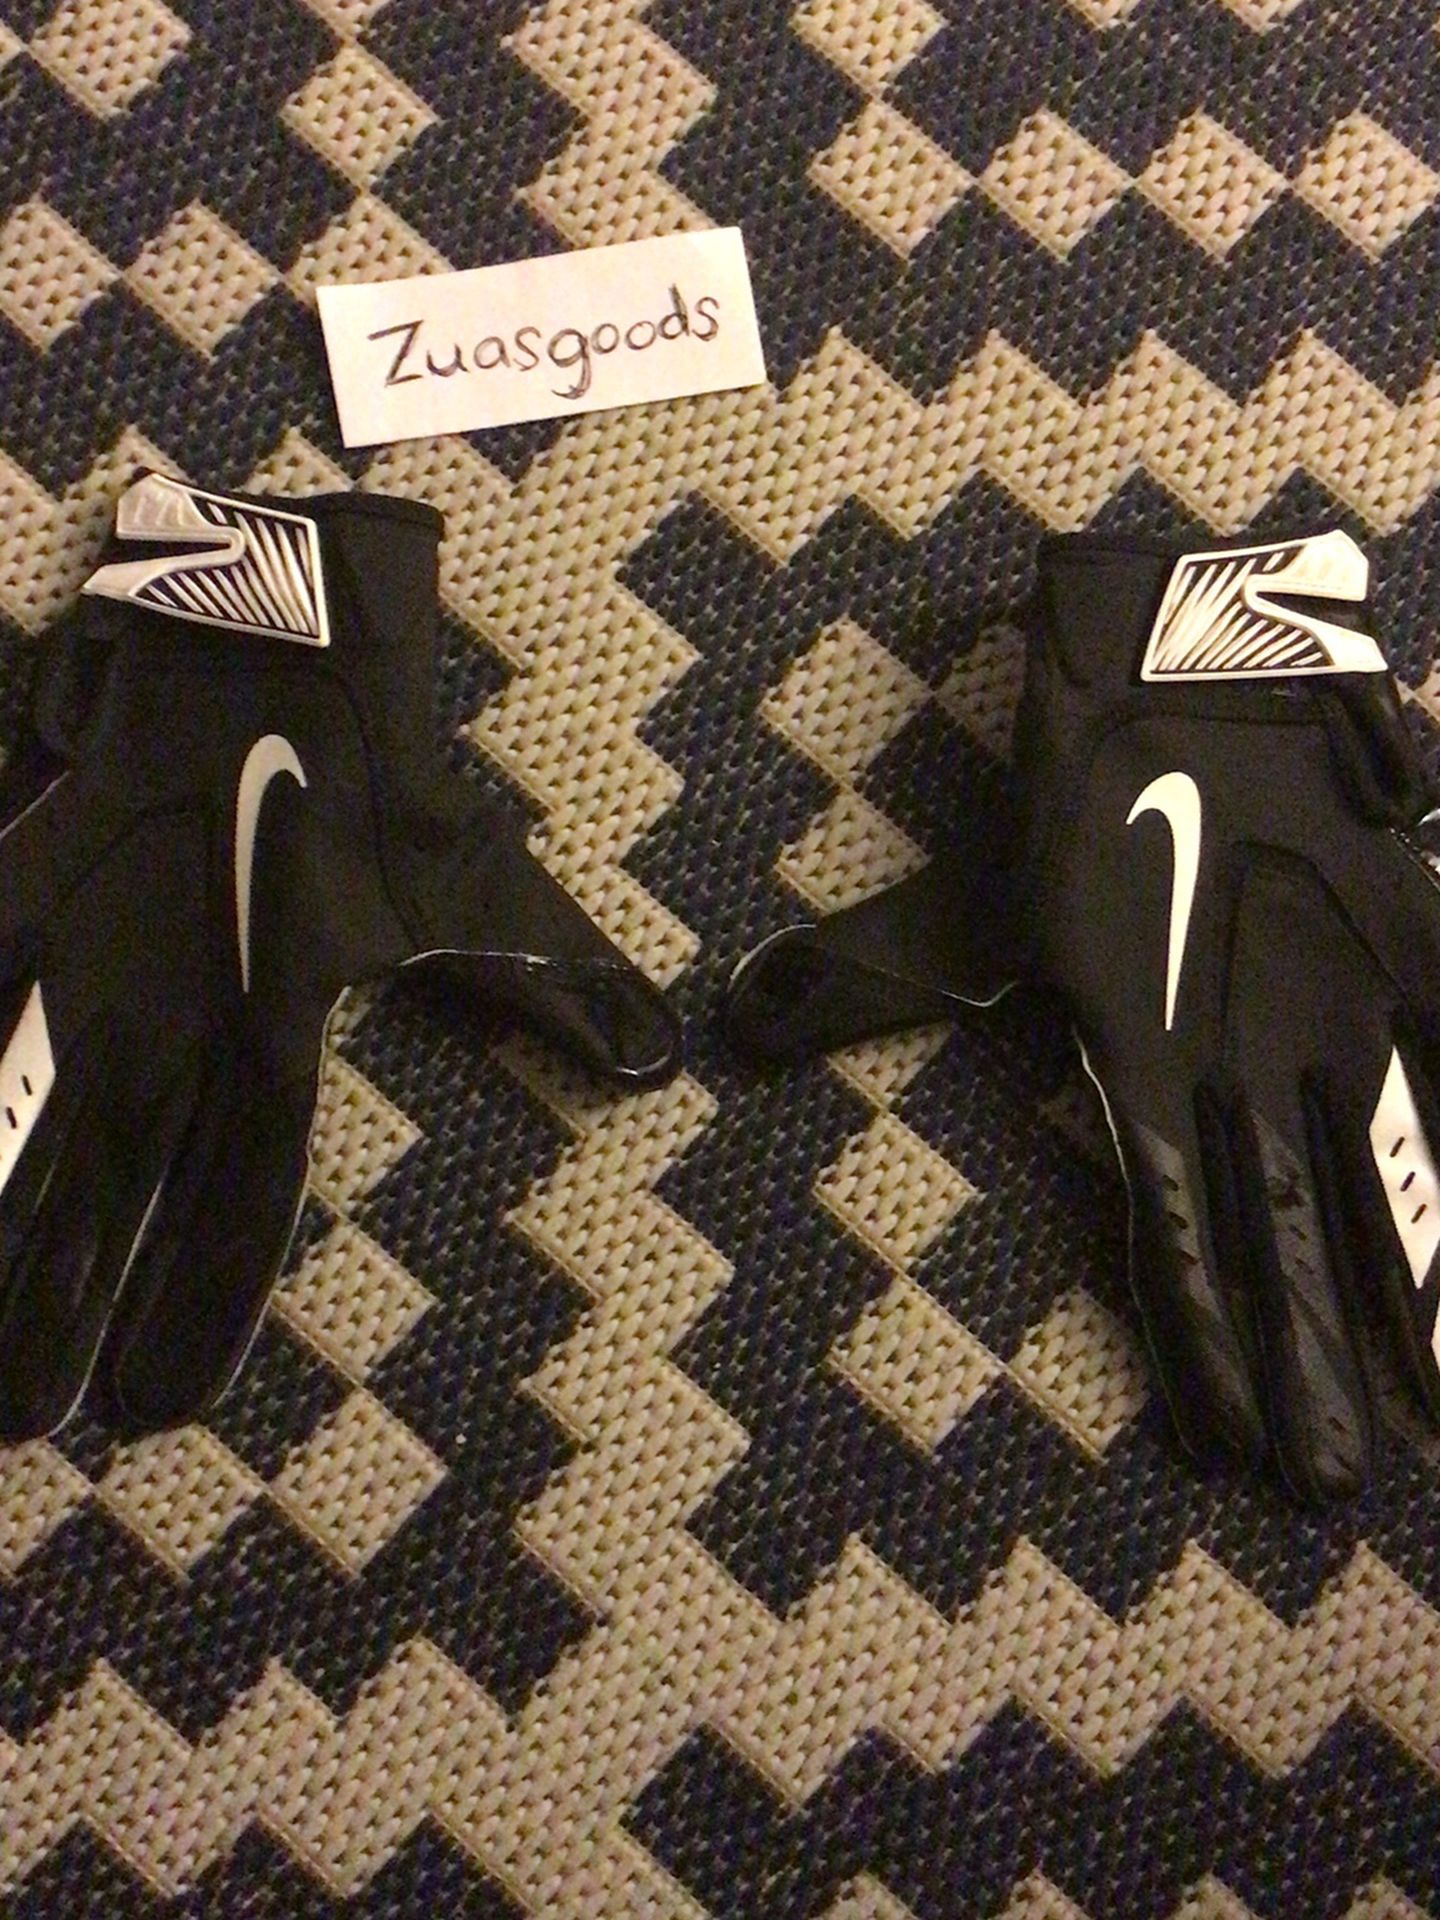 Nike Vapor Jet Football Gloves Black Size medium new